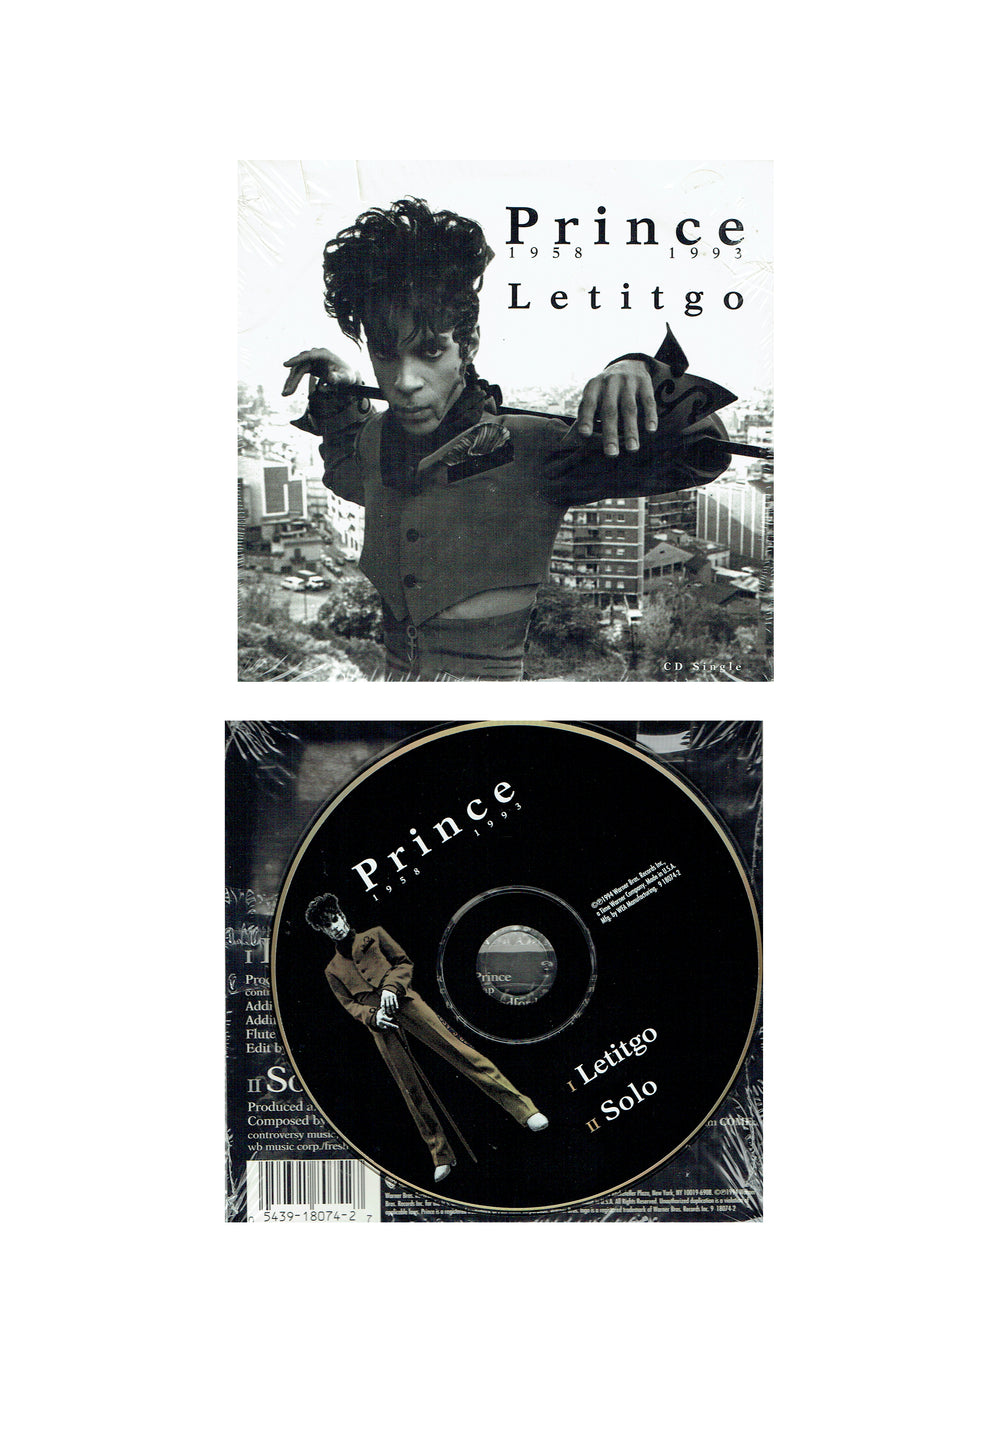 Prince – O(+> Letitgo CD Single Pic US Preloved: 1994